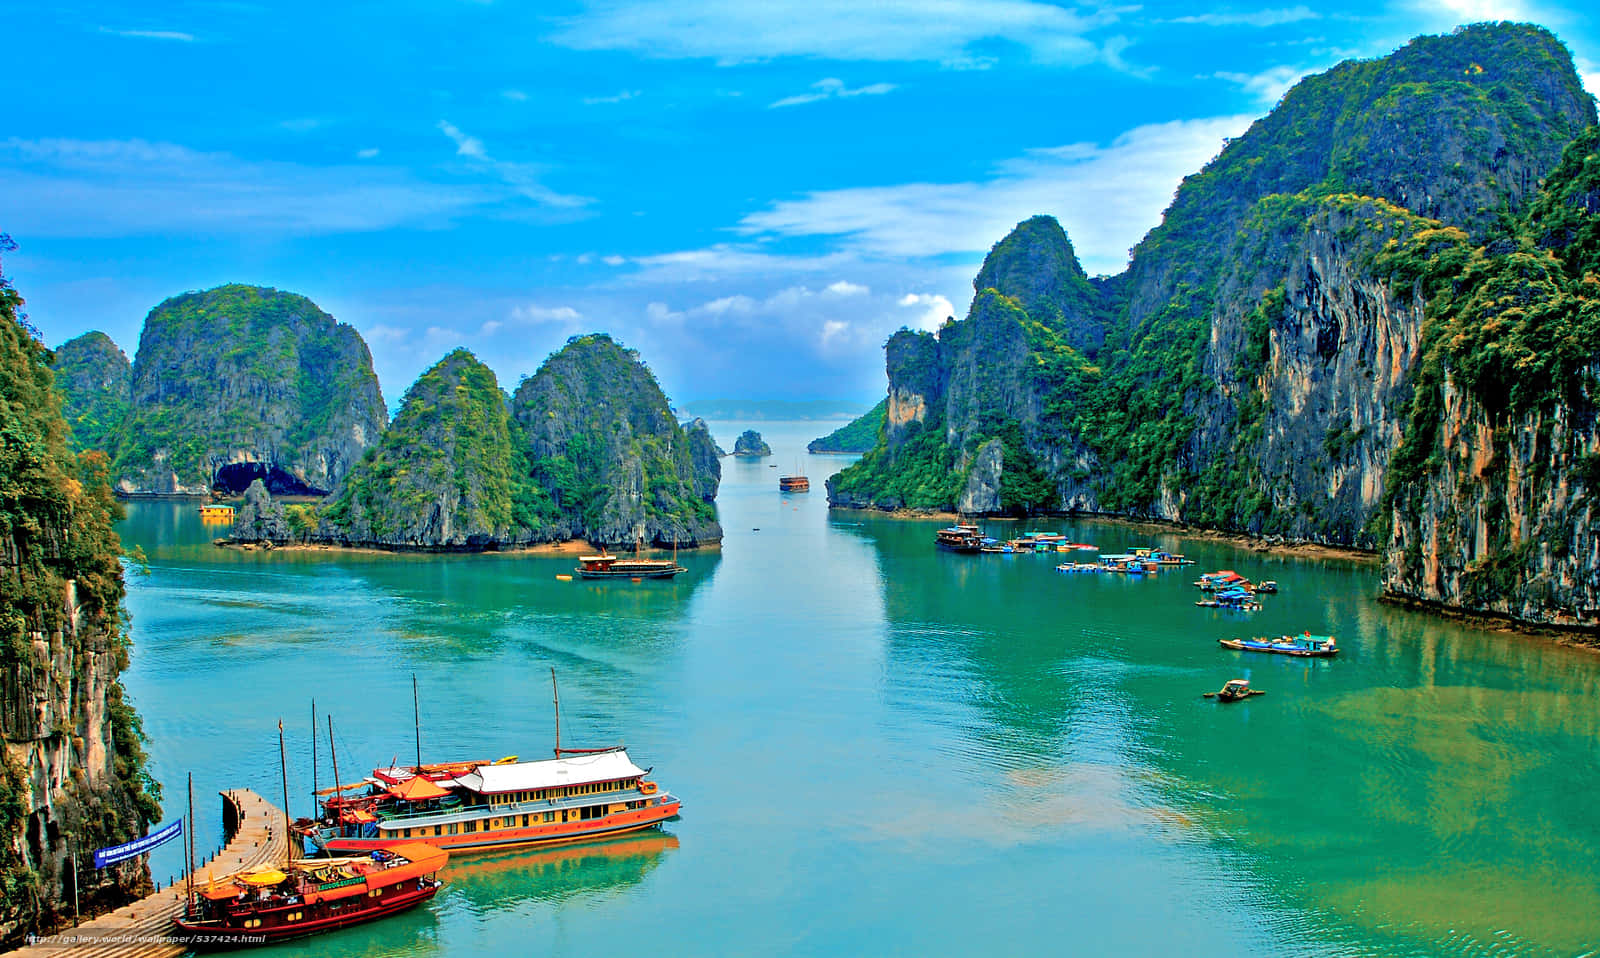 "Exploring the mesmerizing beauty of Vietnam".